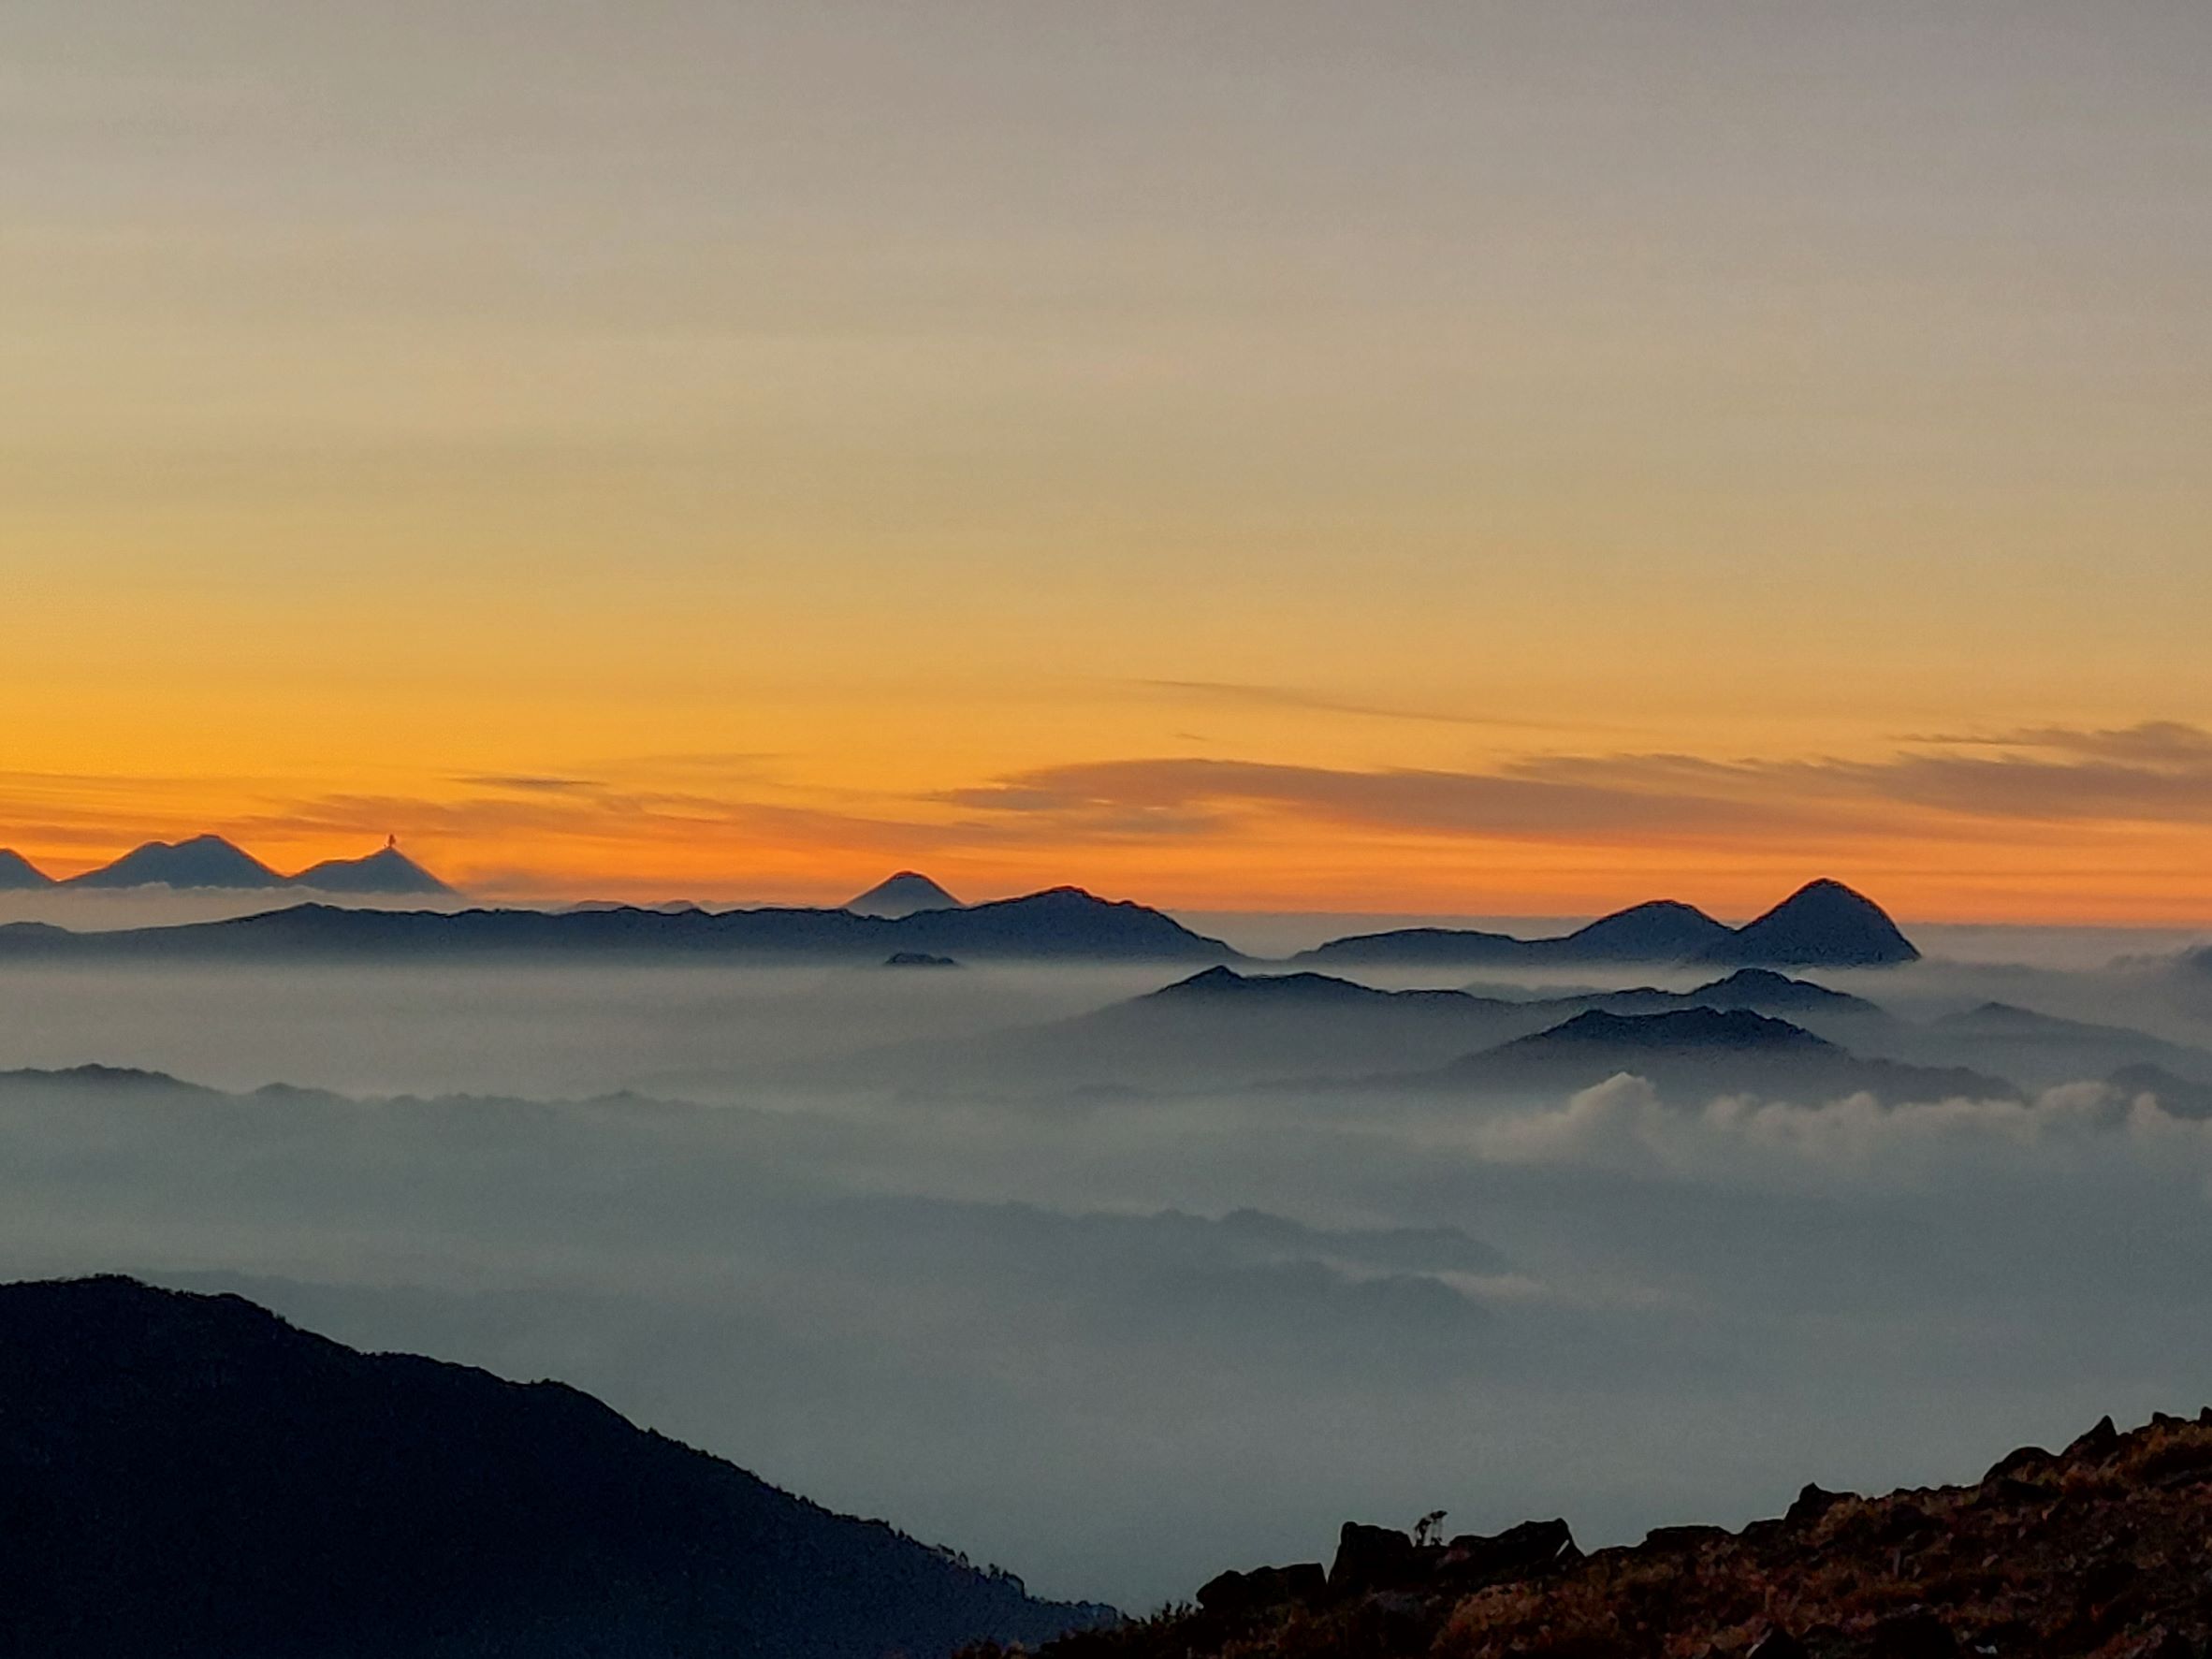 Guatemalas Amazing Volcanoes
Dawn approaching, Tajumulco summit - © William Mackesy